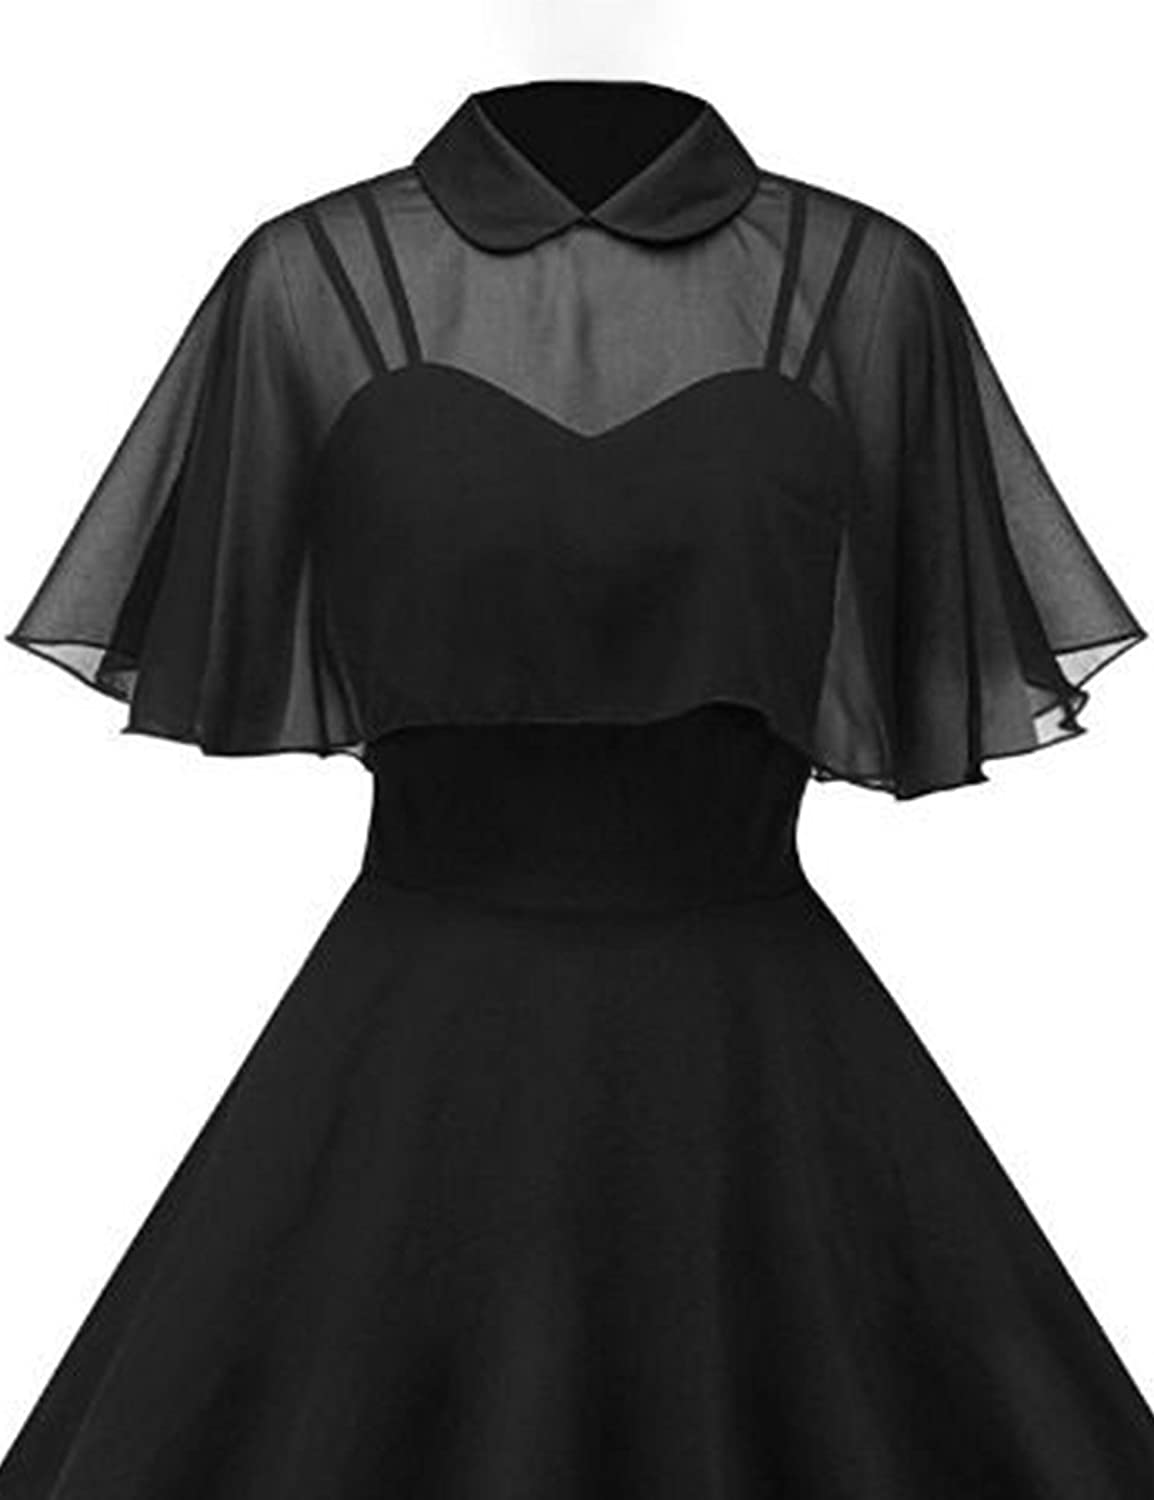 GownTown Women's 1950s Cloak Two-Piece Cocktail Dress 